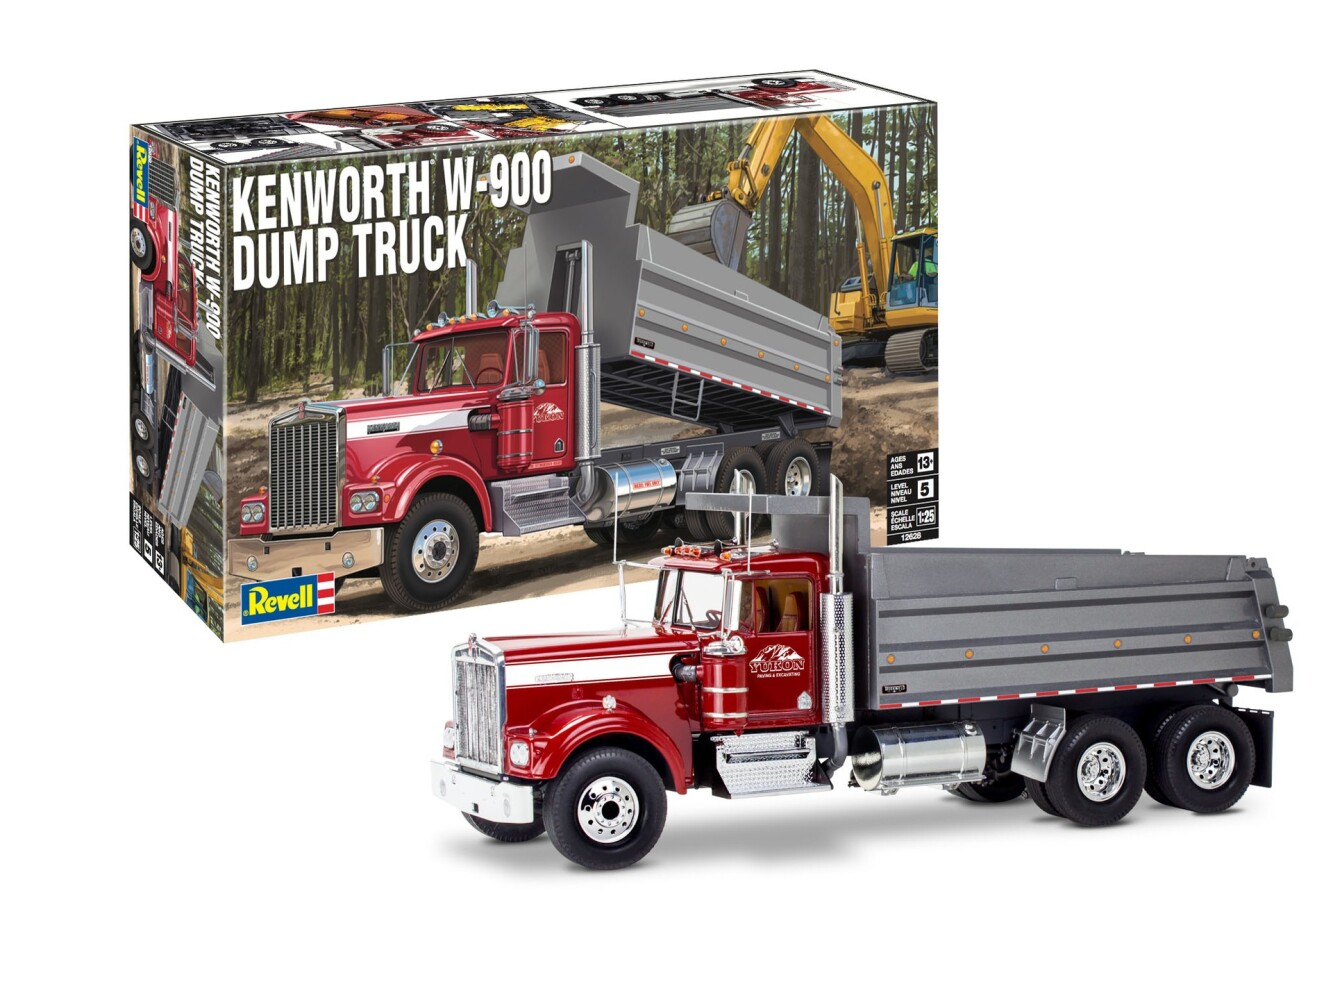 Kenworth W-900 Dump Truck